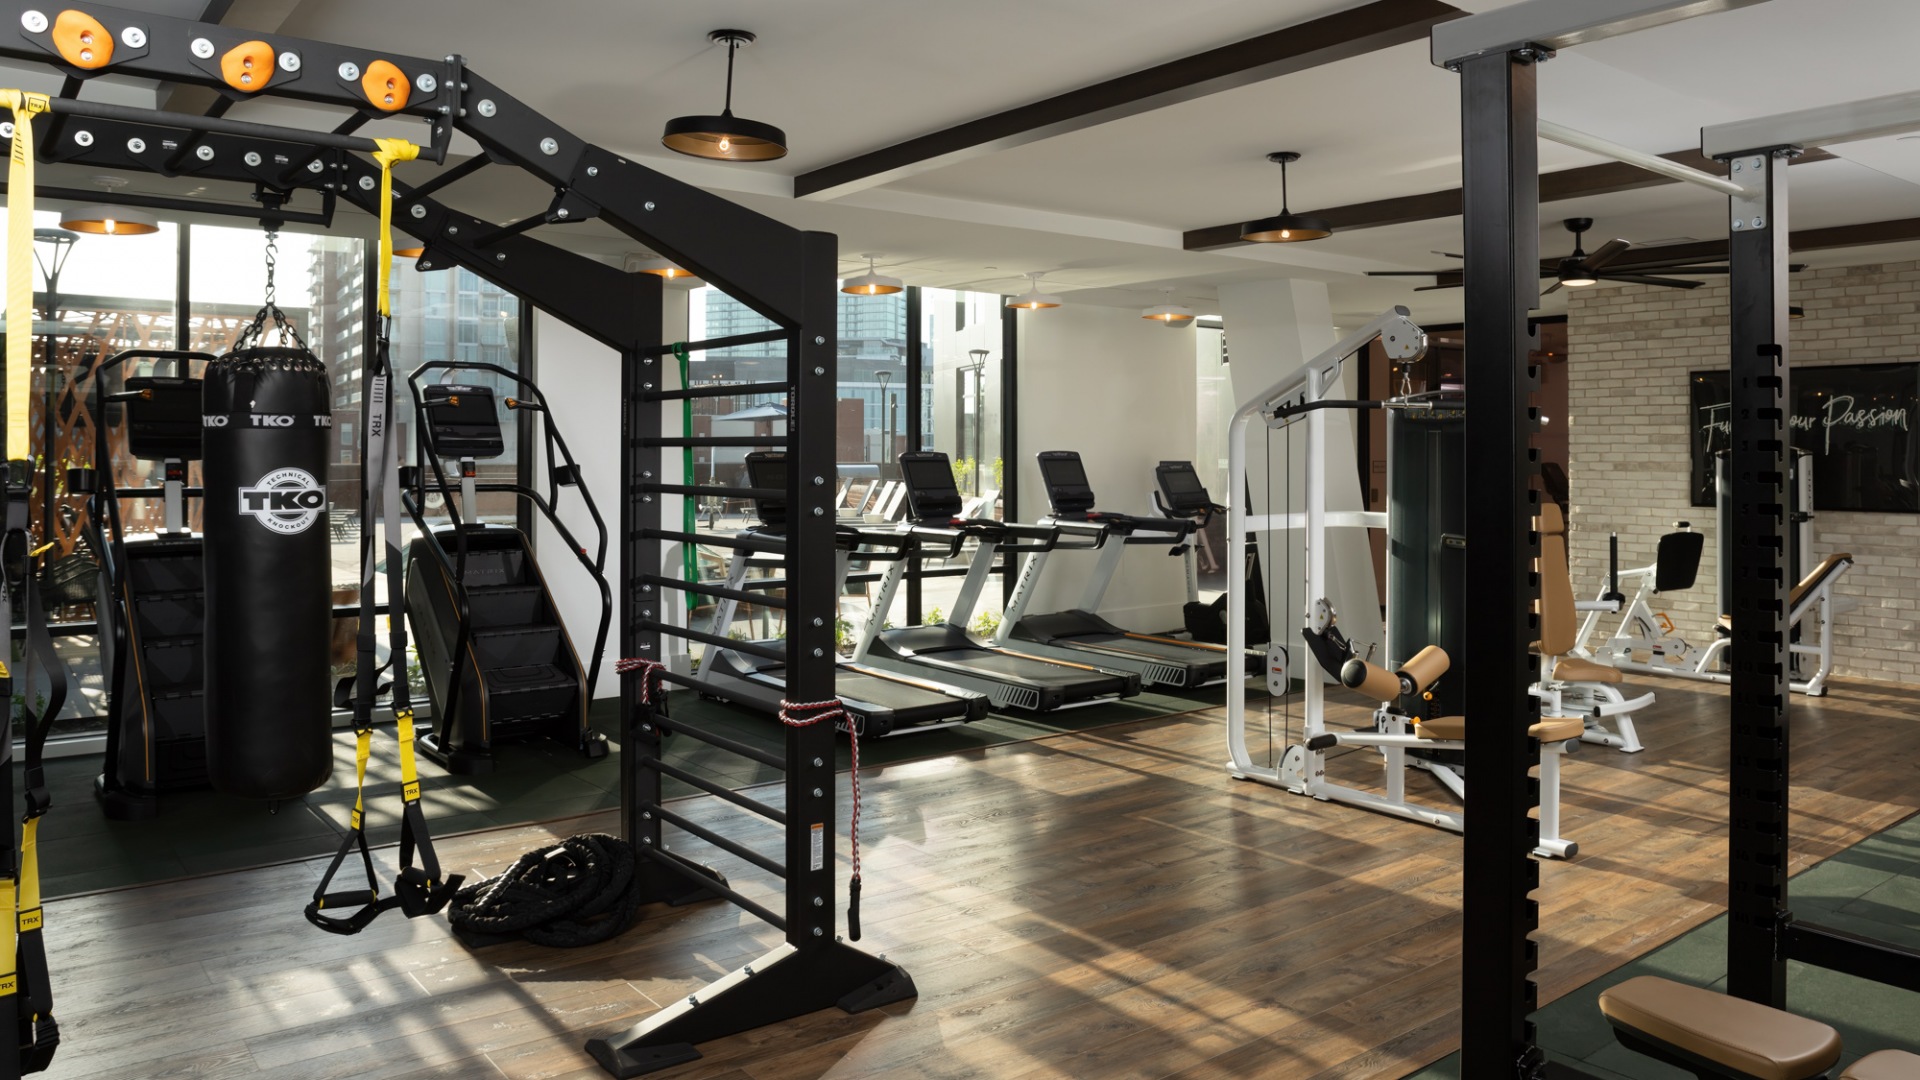 Studio 908 Fitness Center